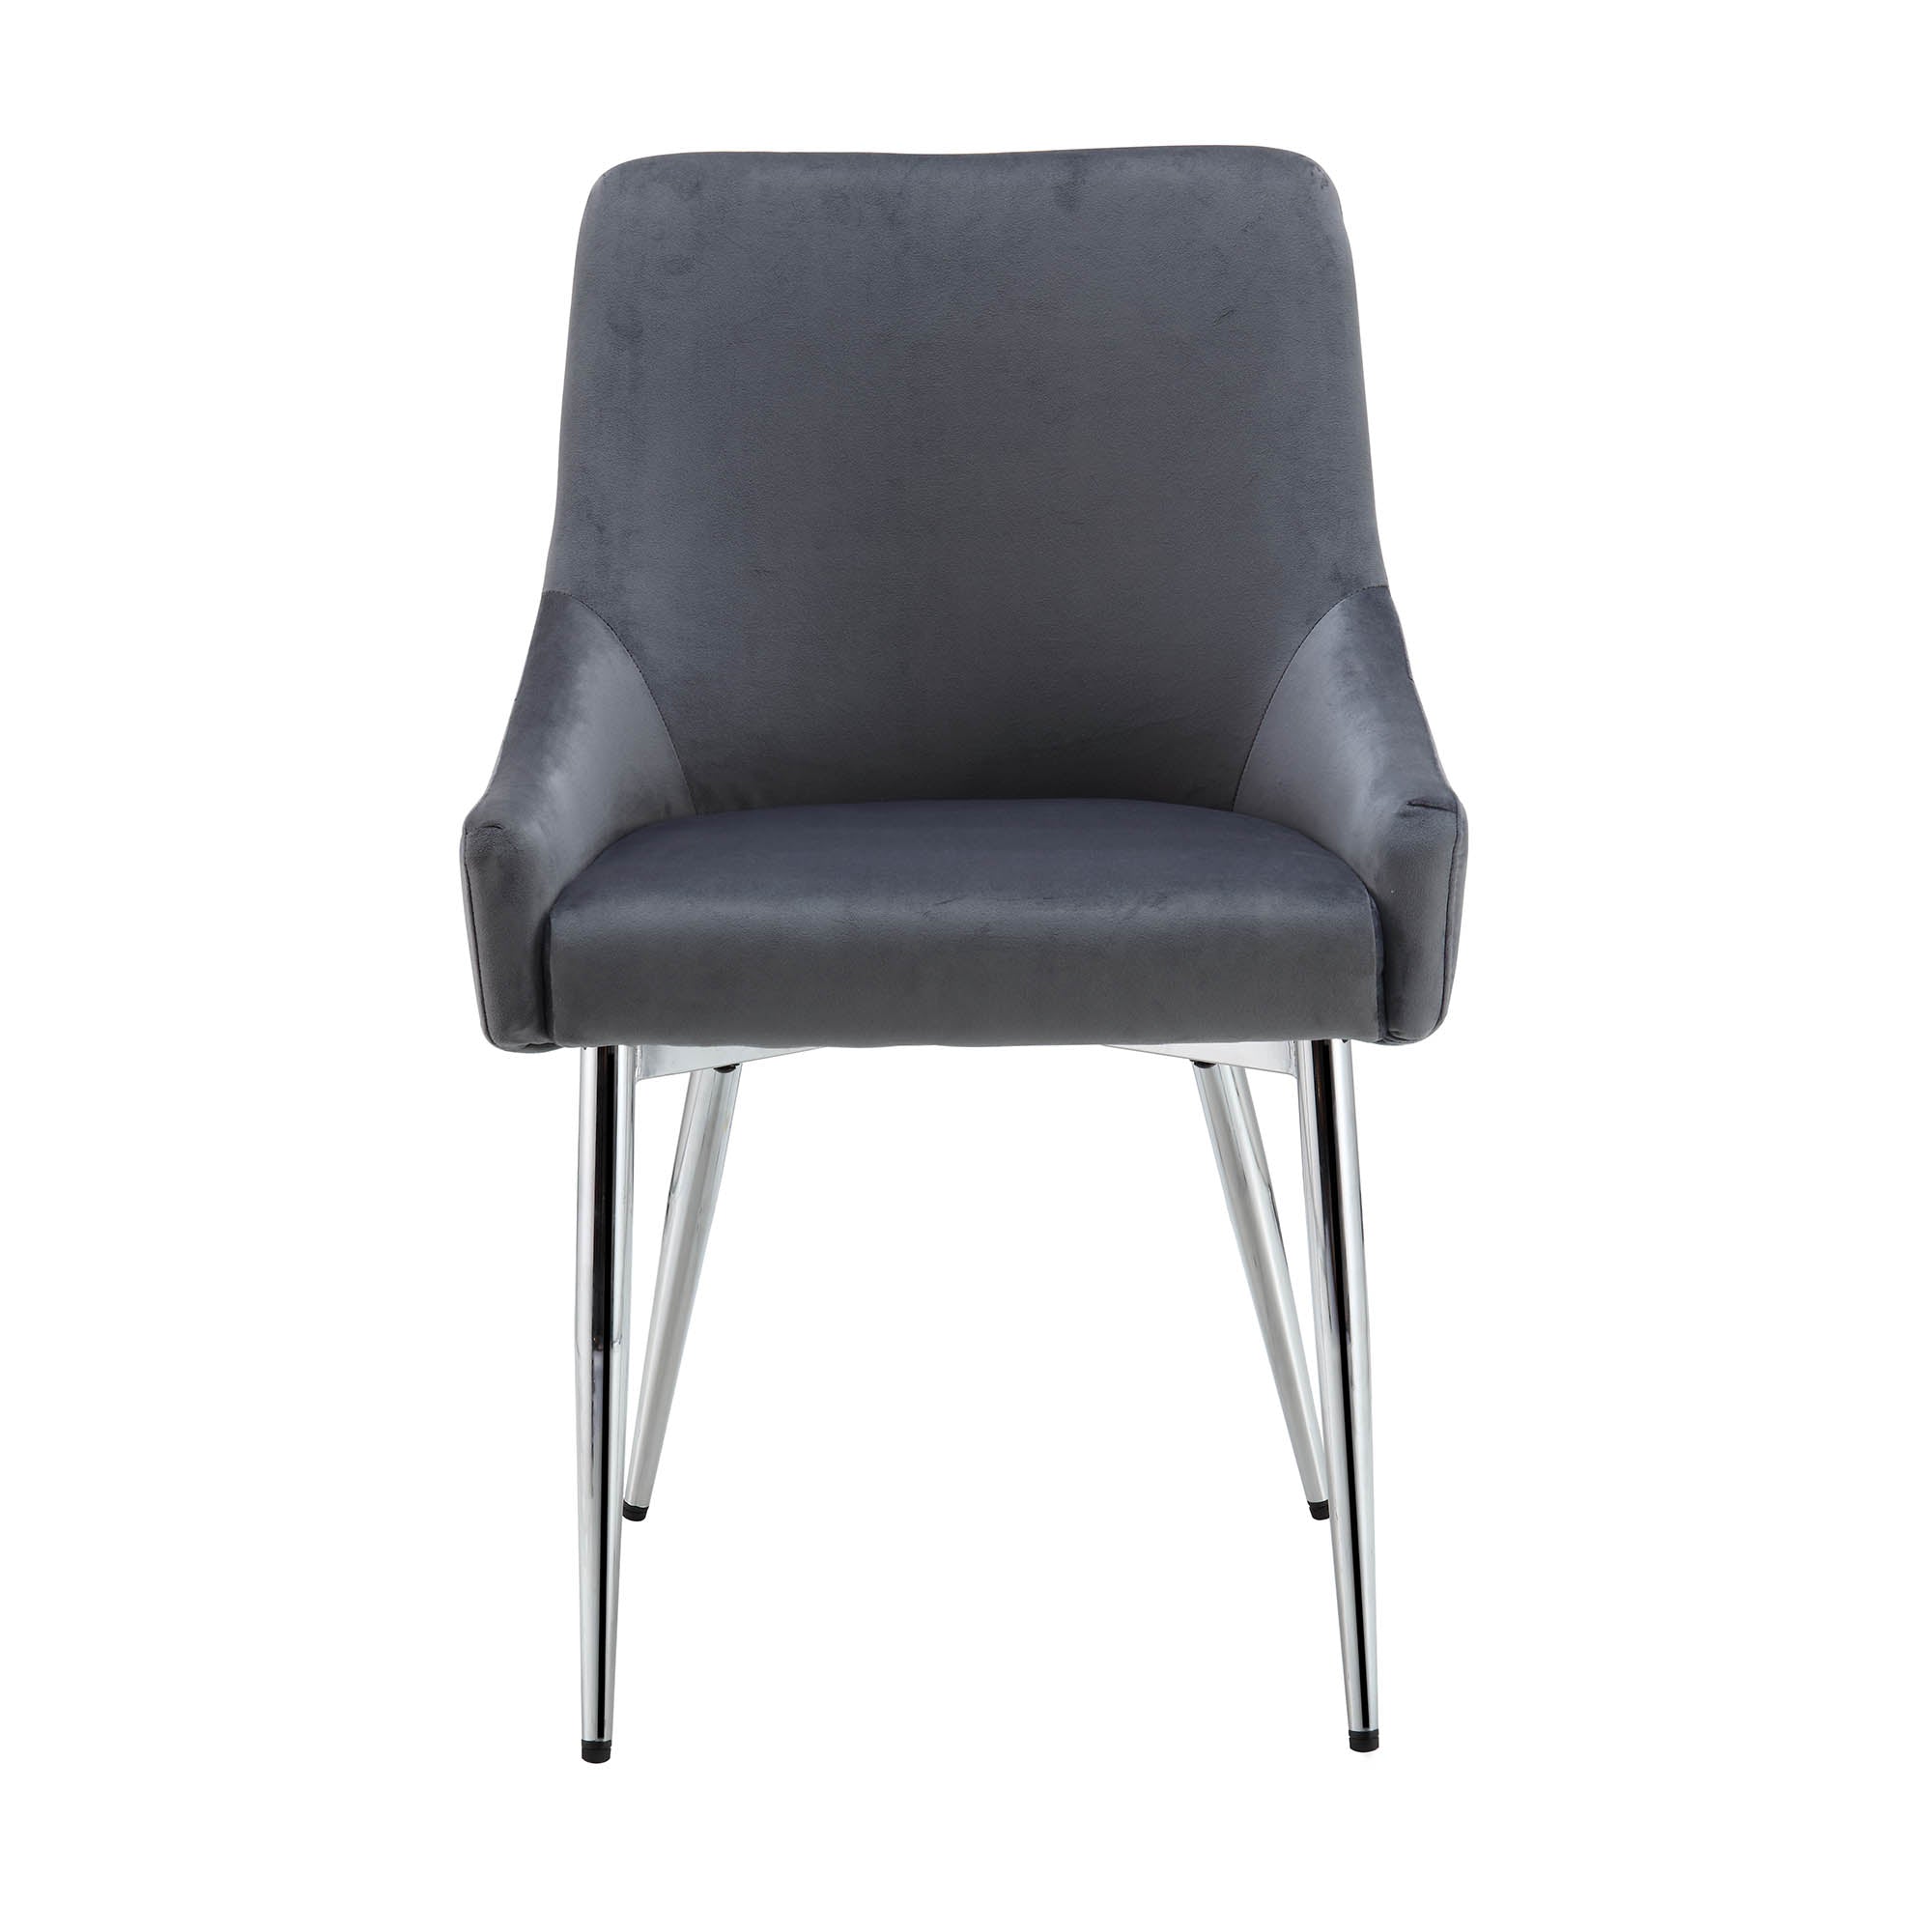 Garnet Set of 2 Dark Grey Velvet Upholstered Dining Chairs with Back Handle